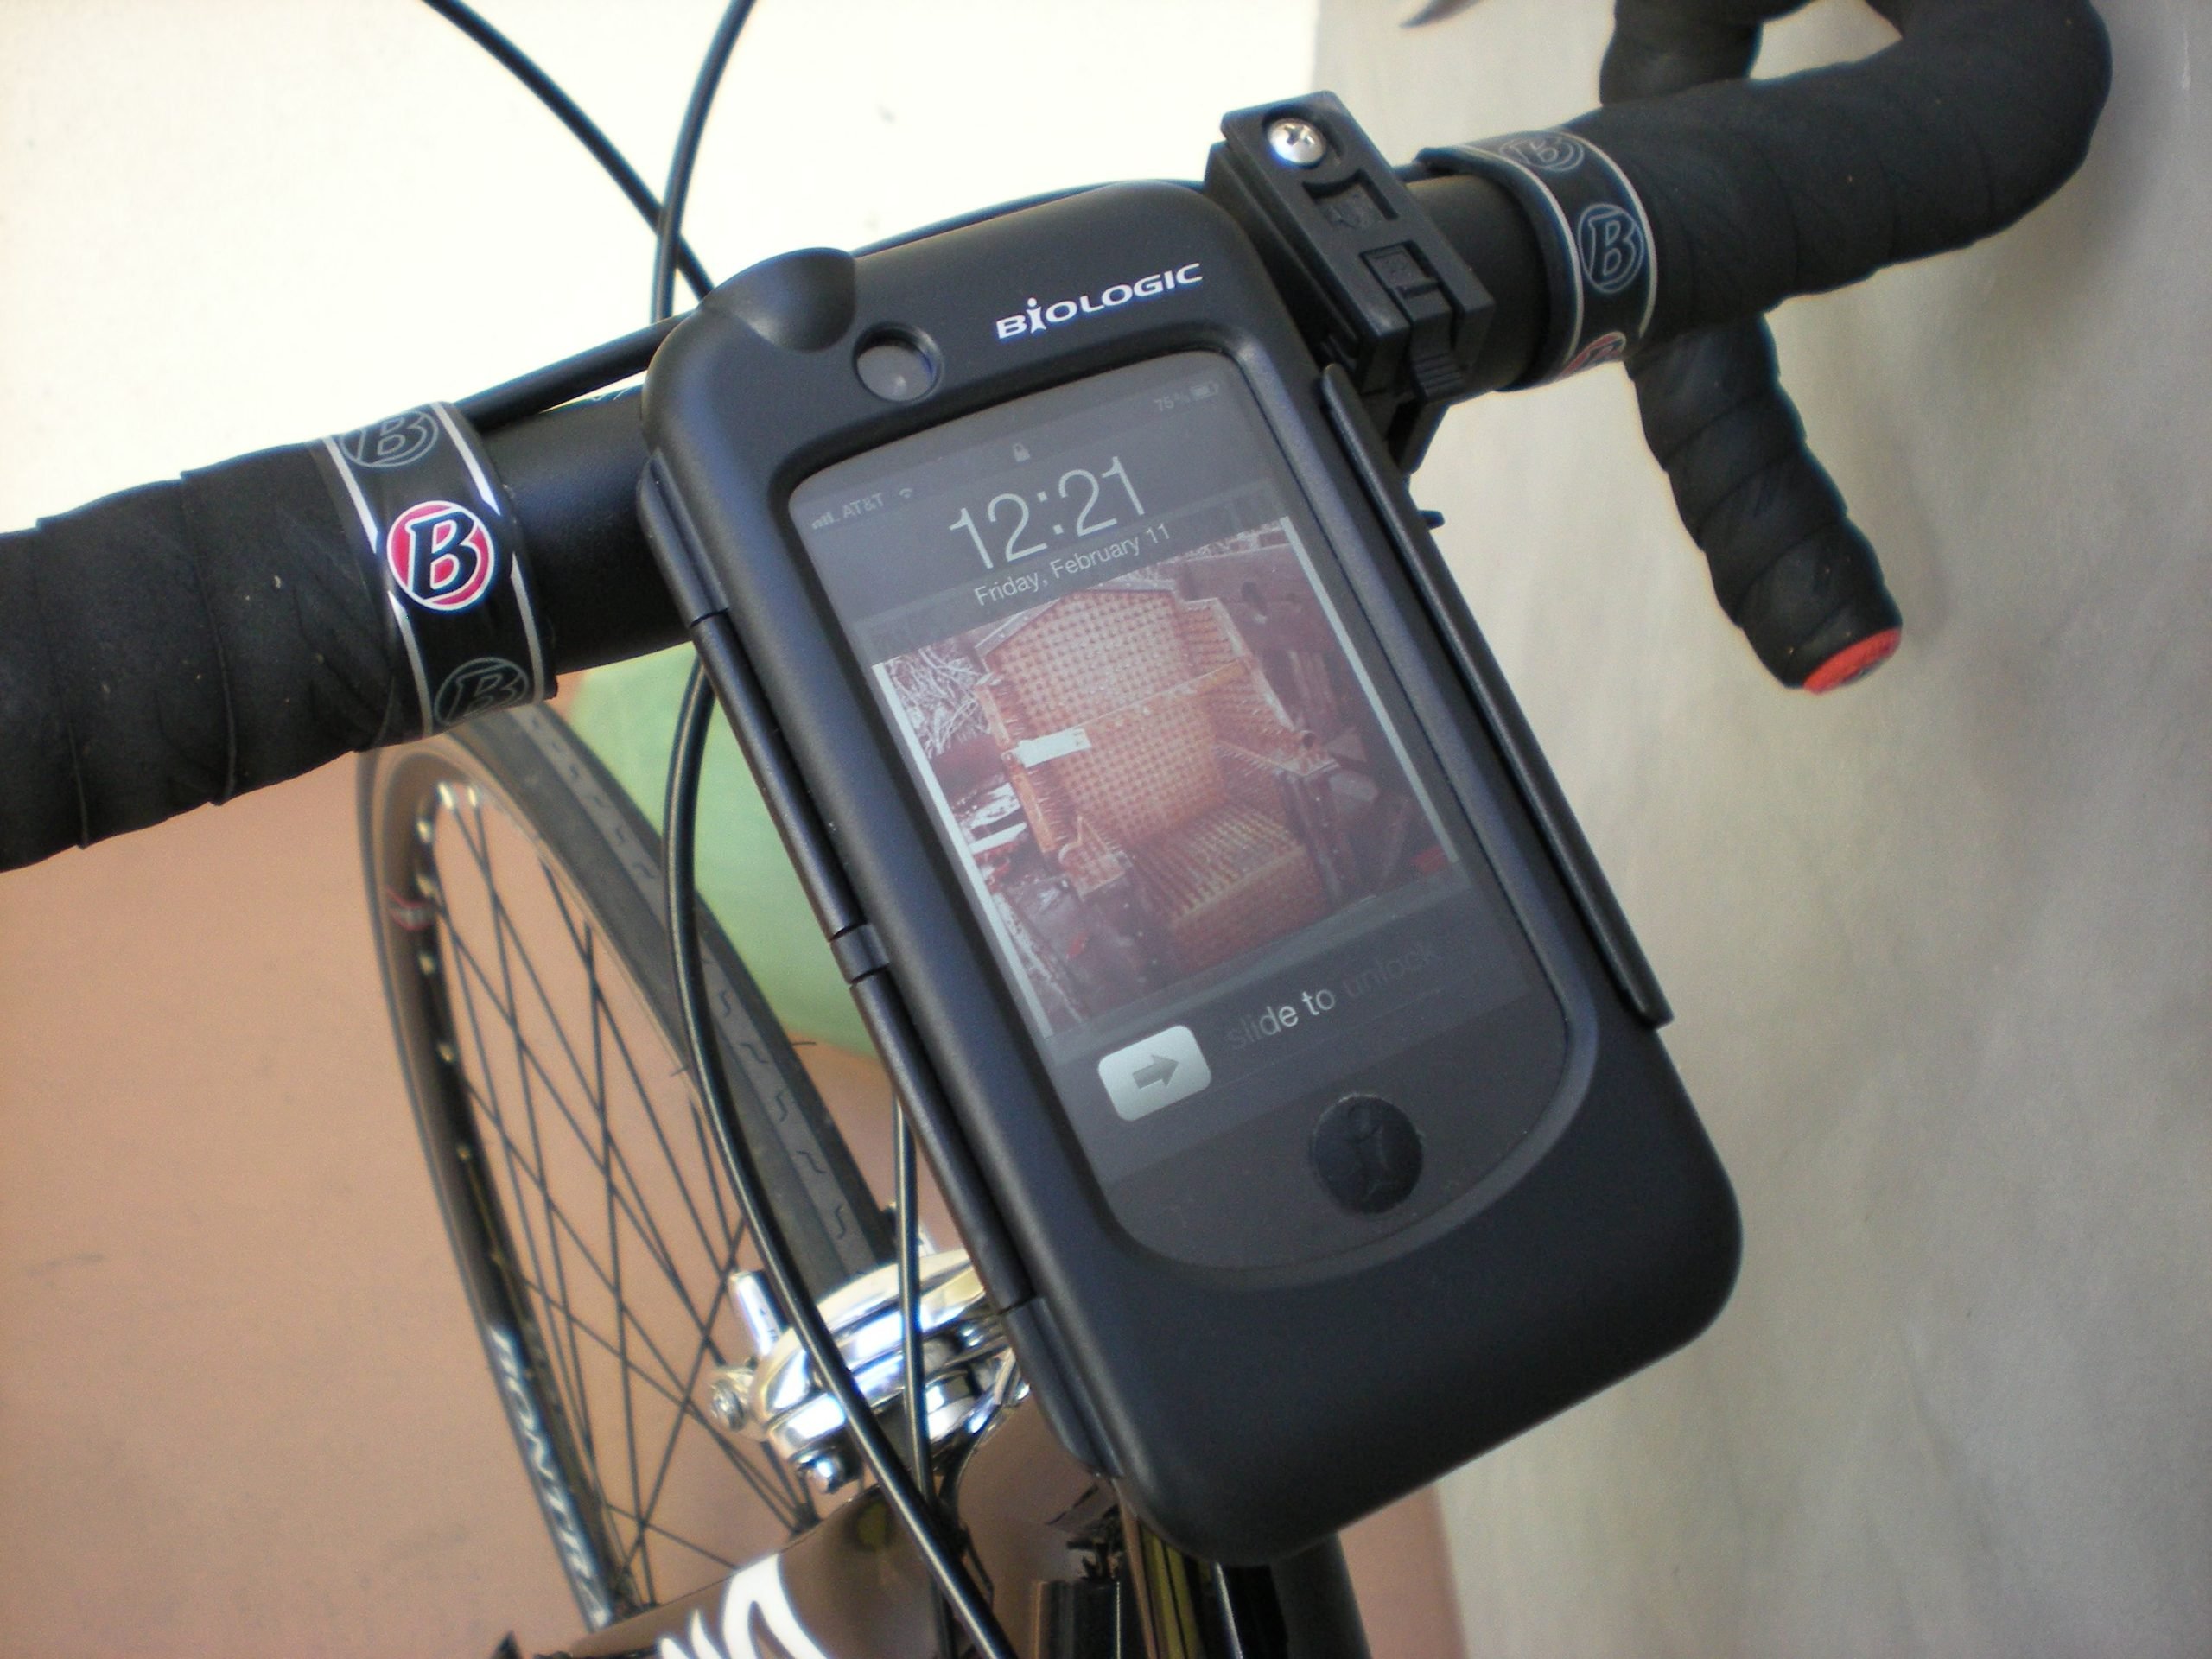 BioLogic iPhone 4 Bike Mounted Case Review